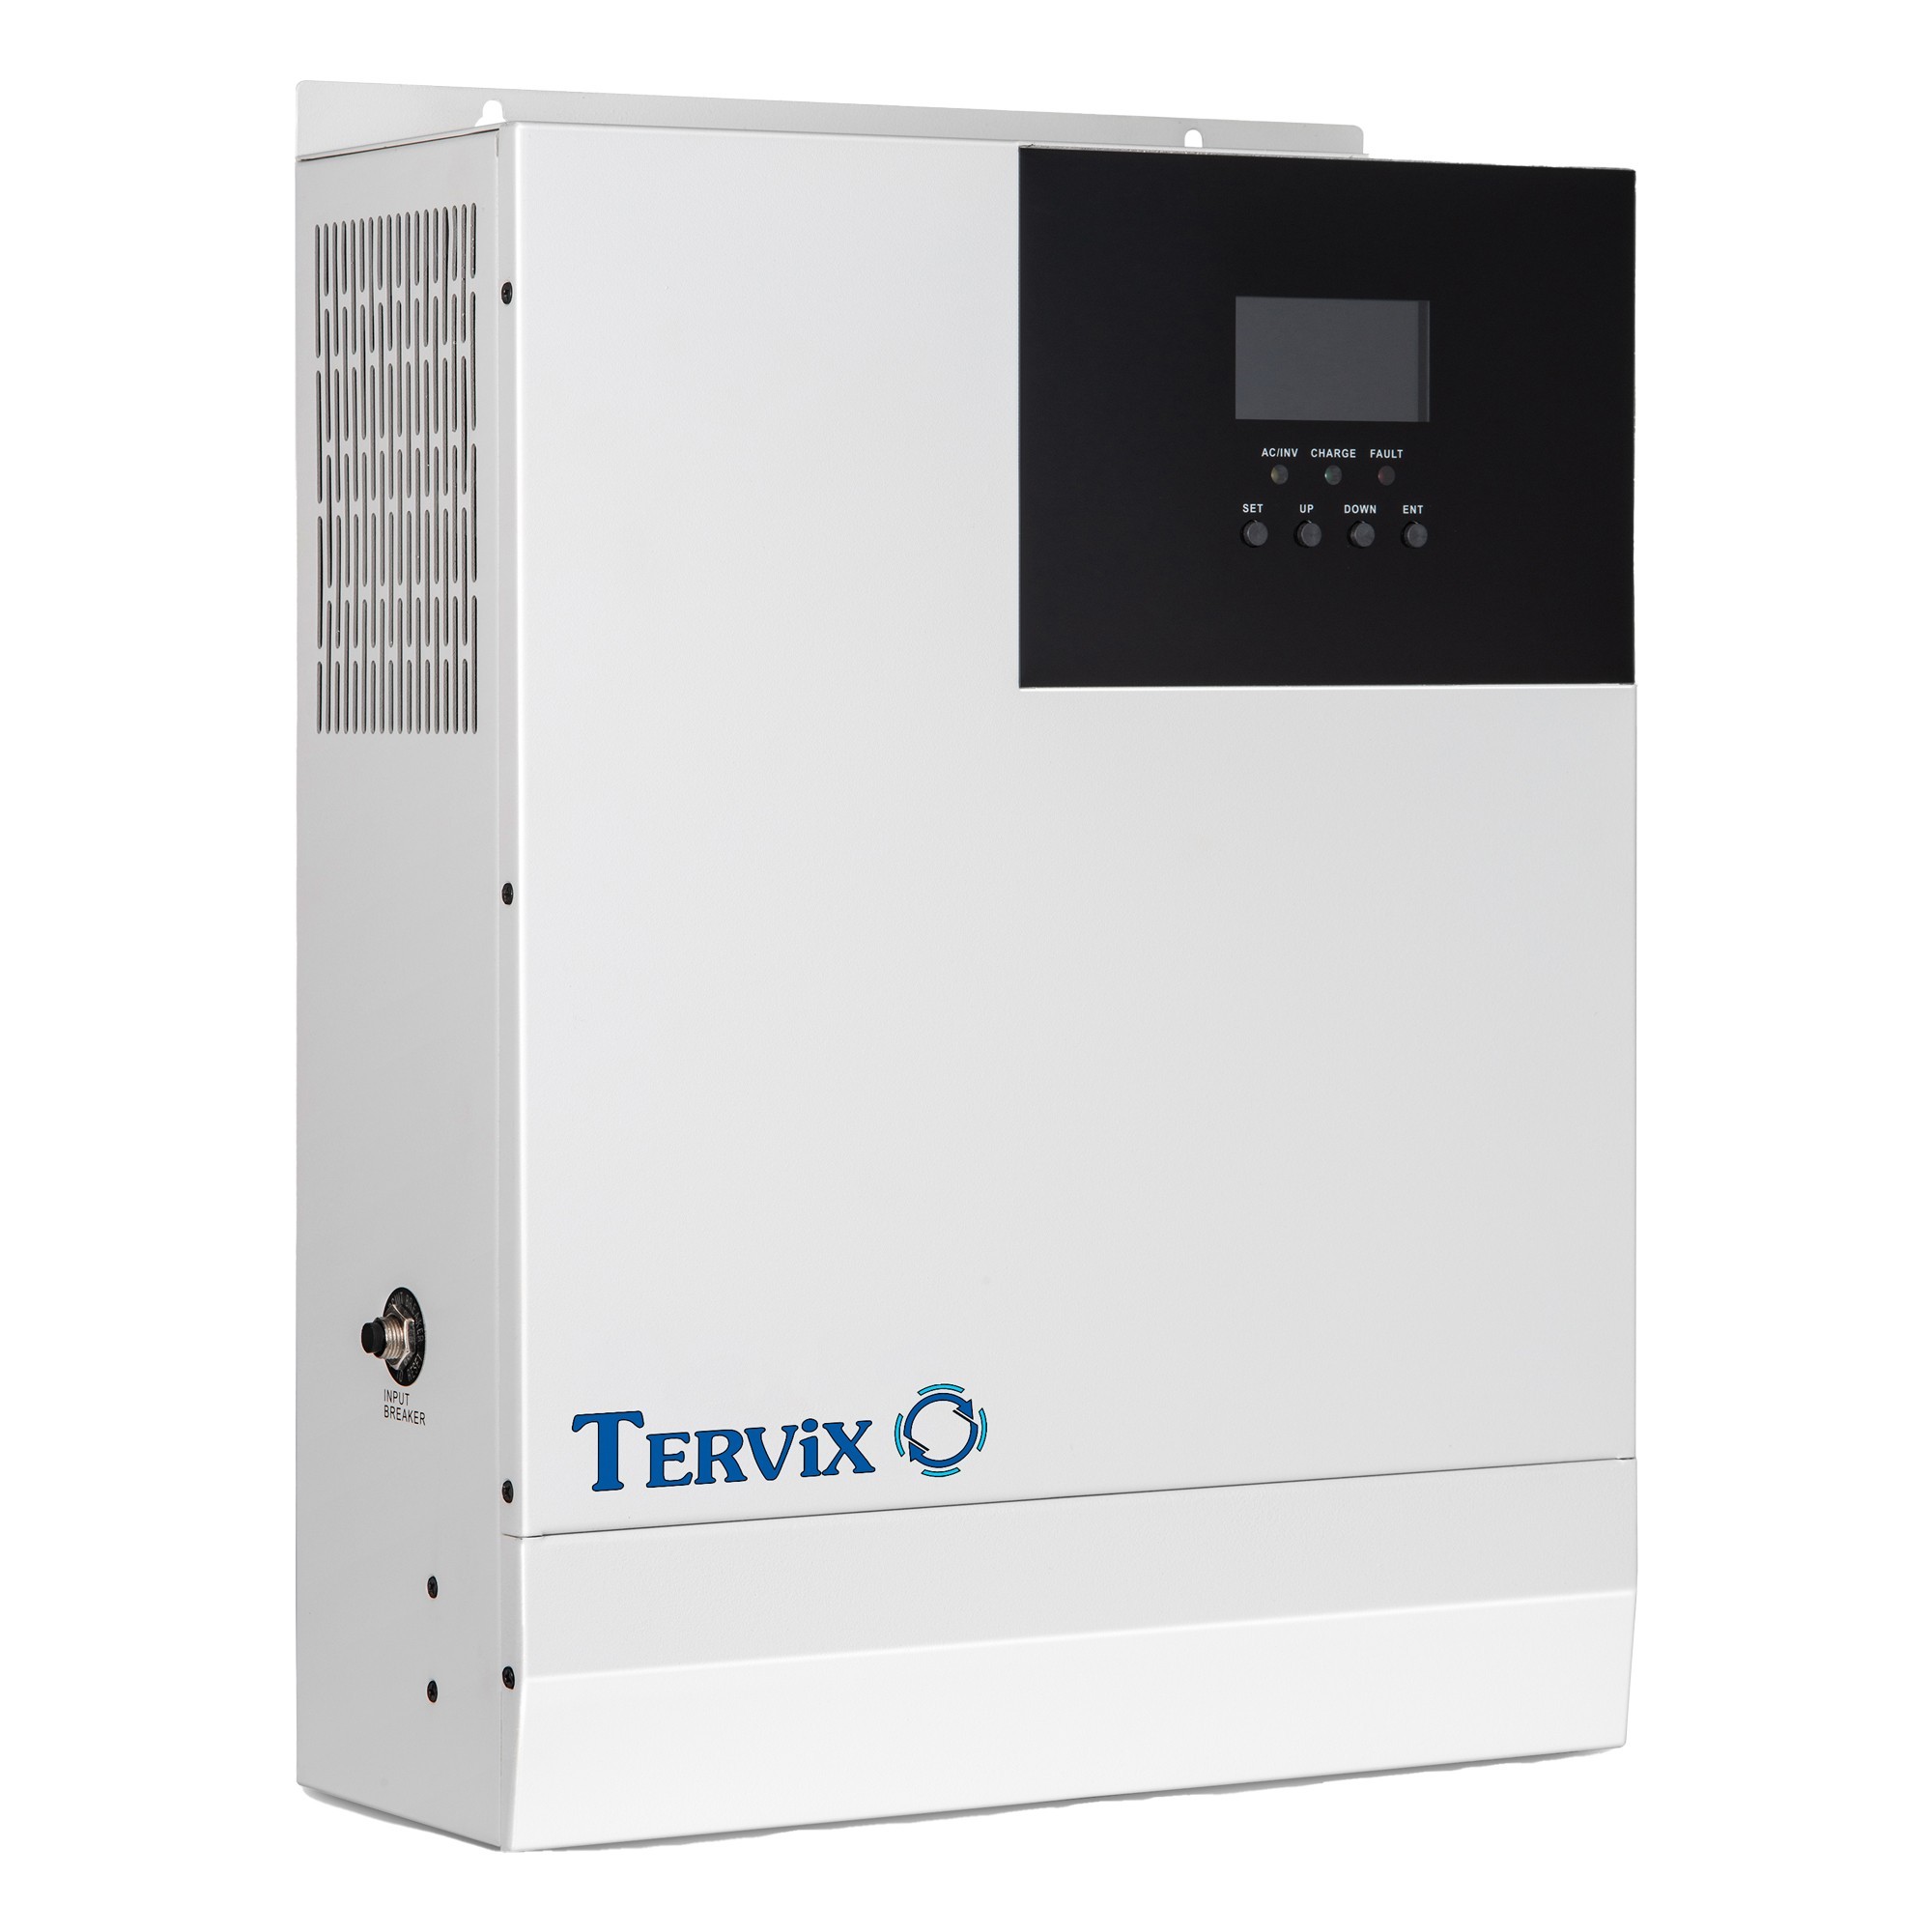 Система автономного питания Tervix BANKA 10,2 кВтч - инвертор 5кВт + аккумулятор 51,2В 100 Ач (2 шт) 693421 цена 225600.00 грн - фотография 2